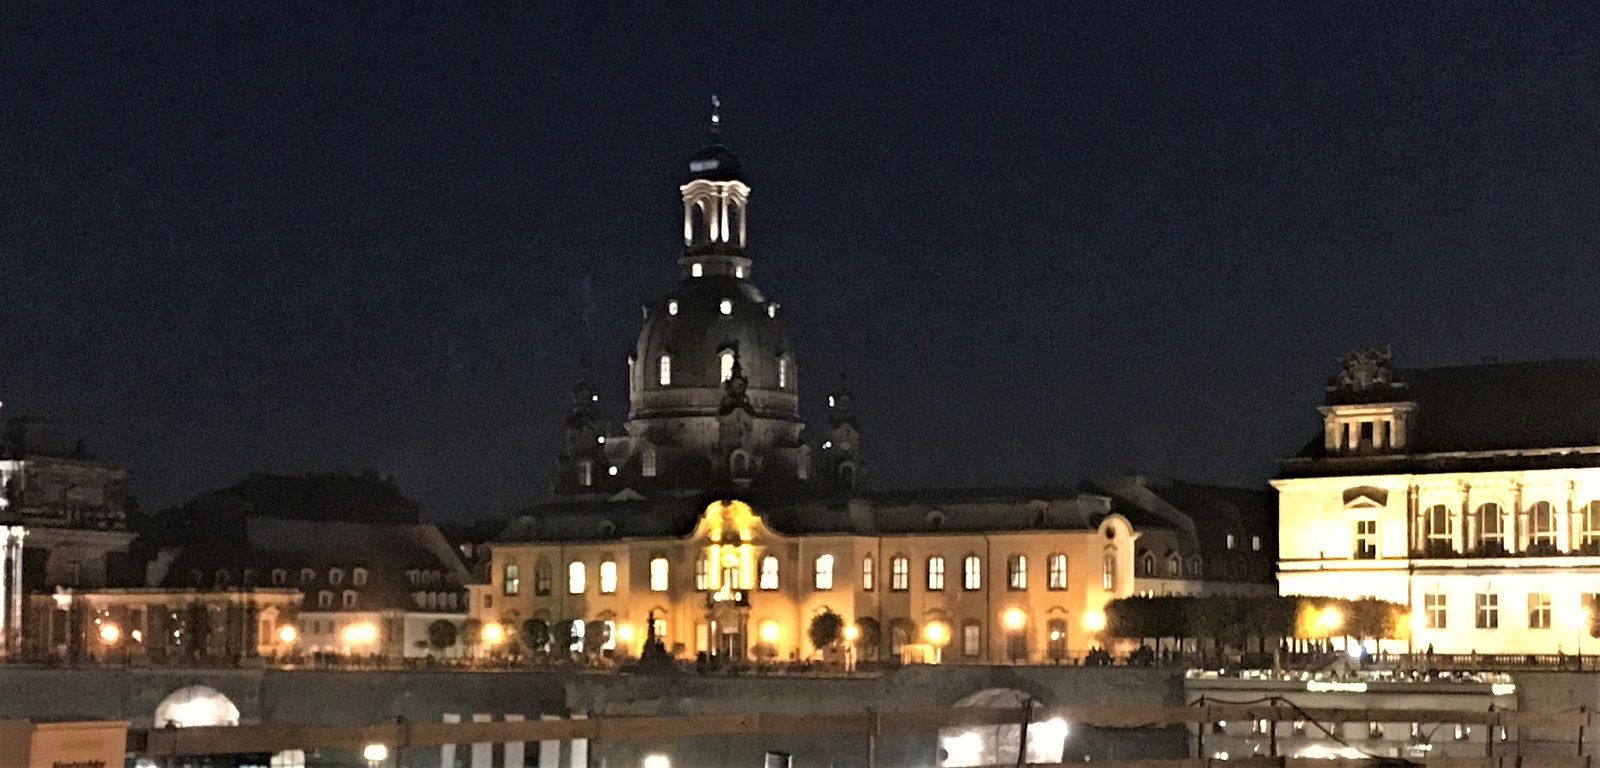 K-Dresden